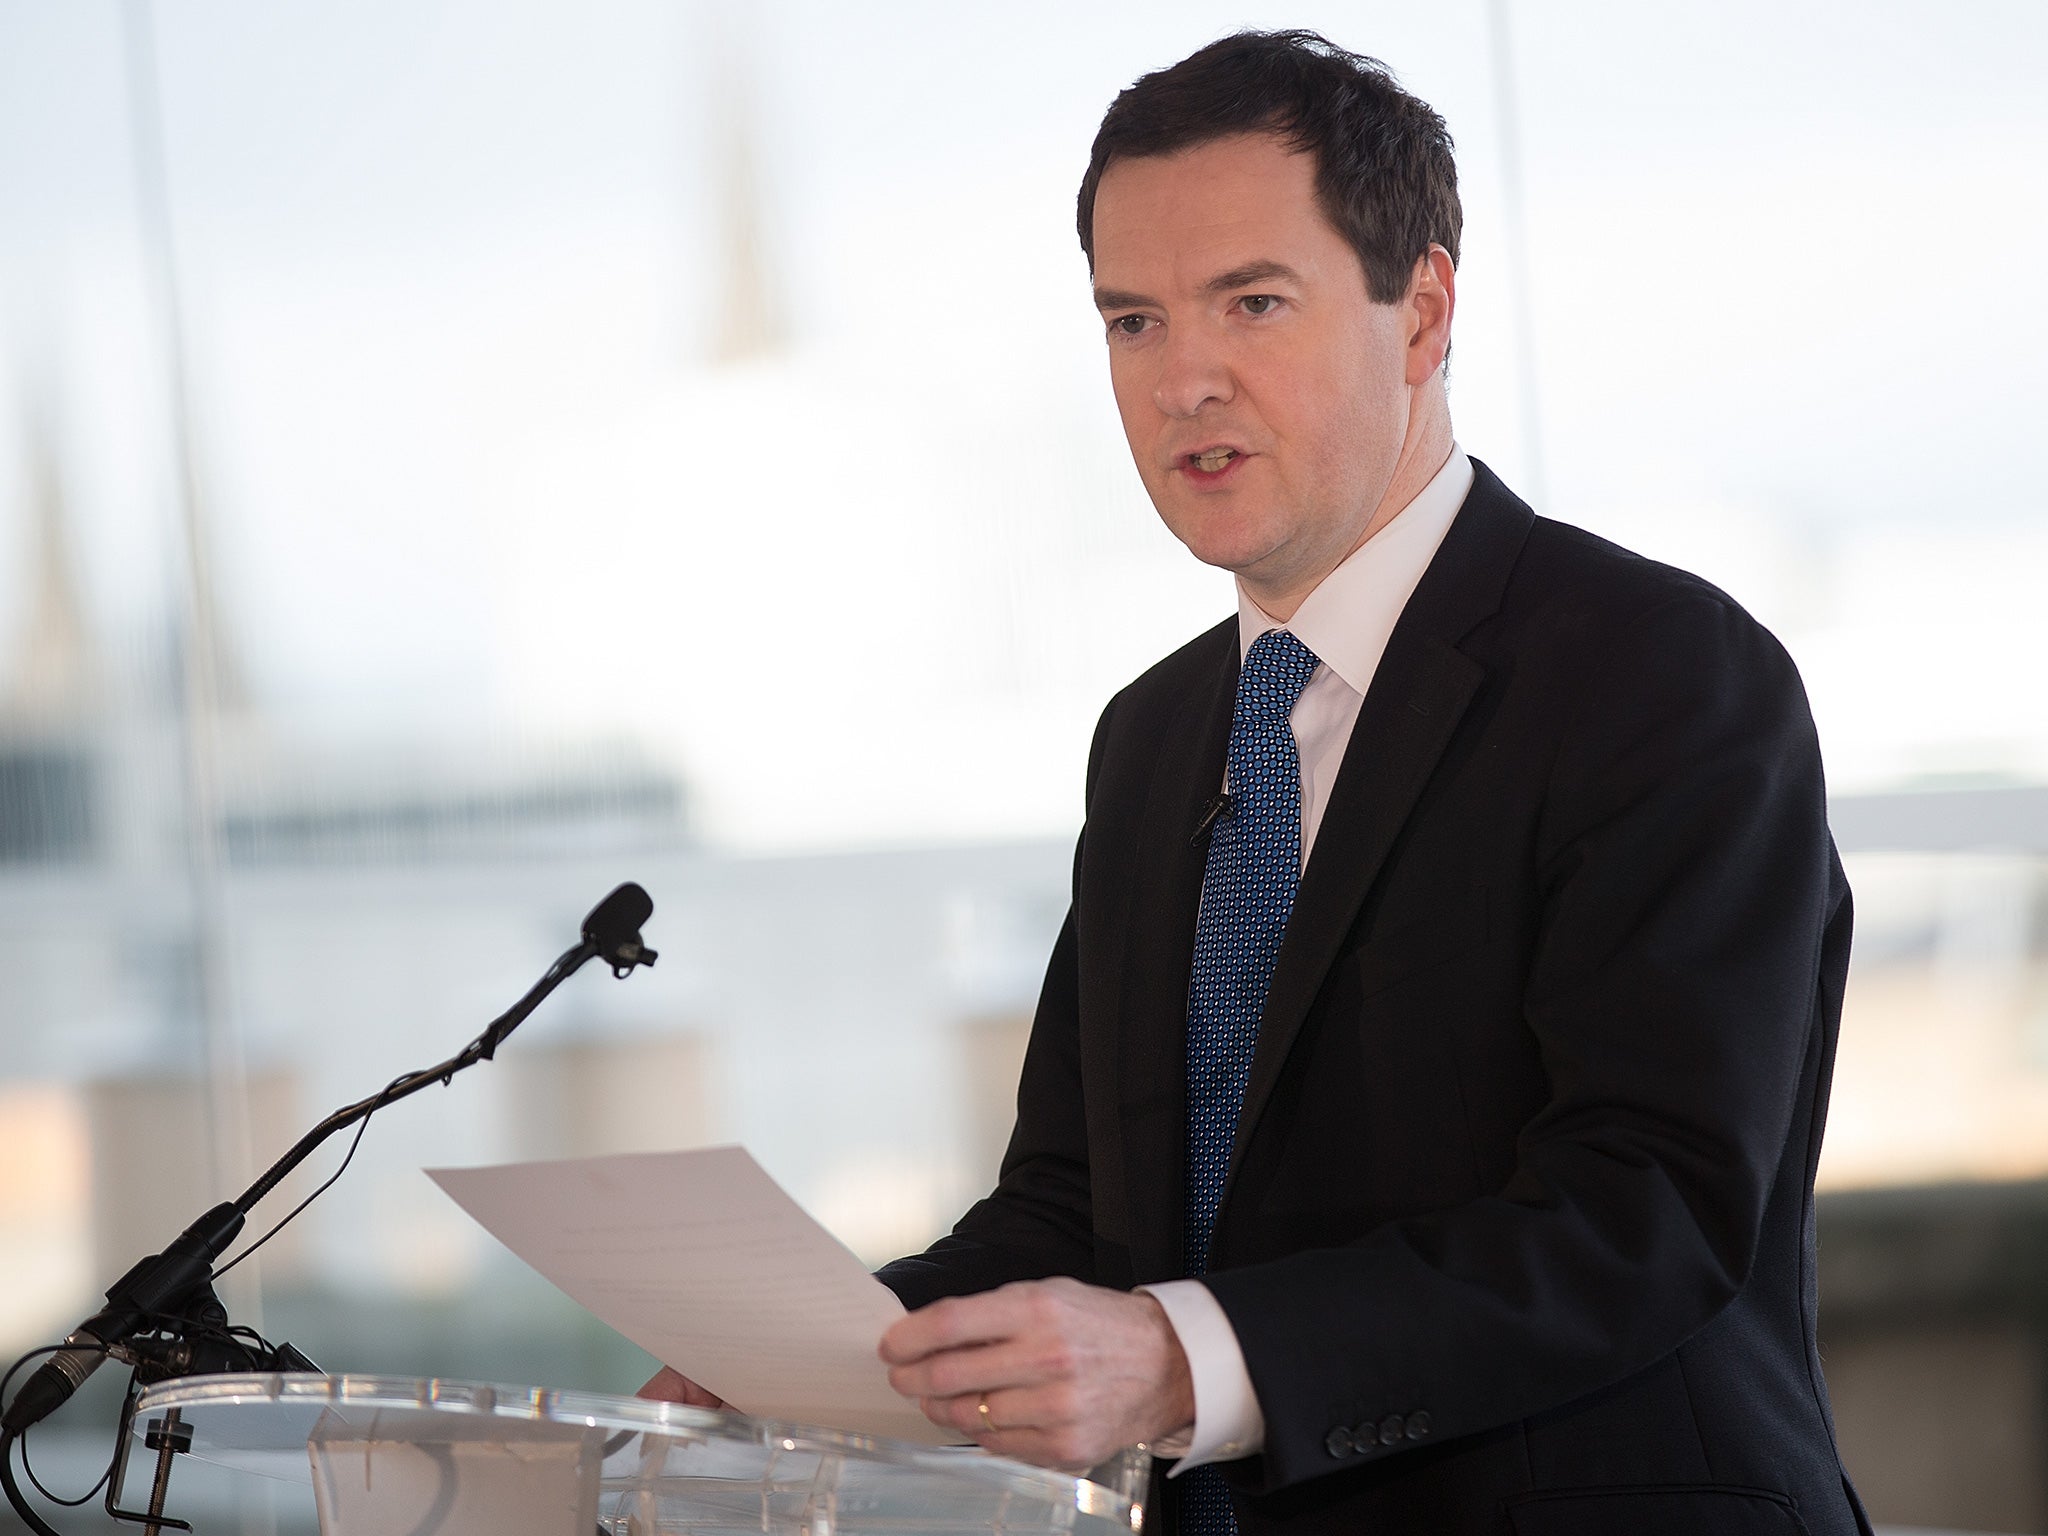 George Osborne won the endorsement of the managing director of the International Monetary Fund, Christine Lagarde